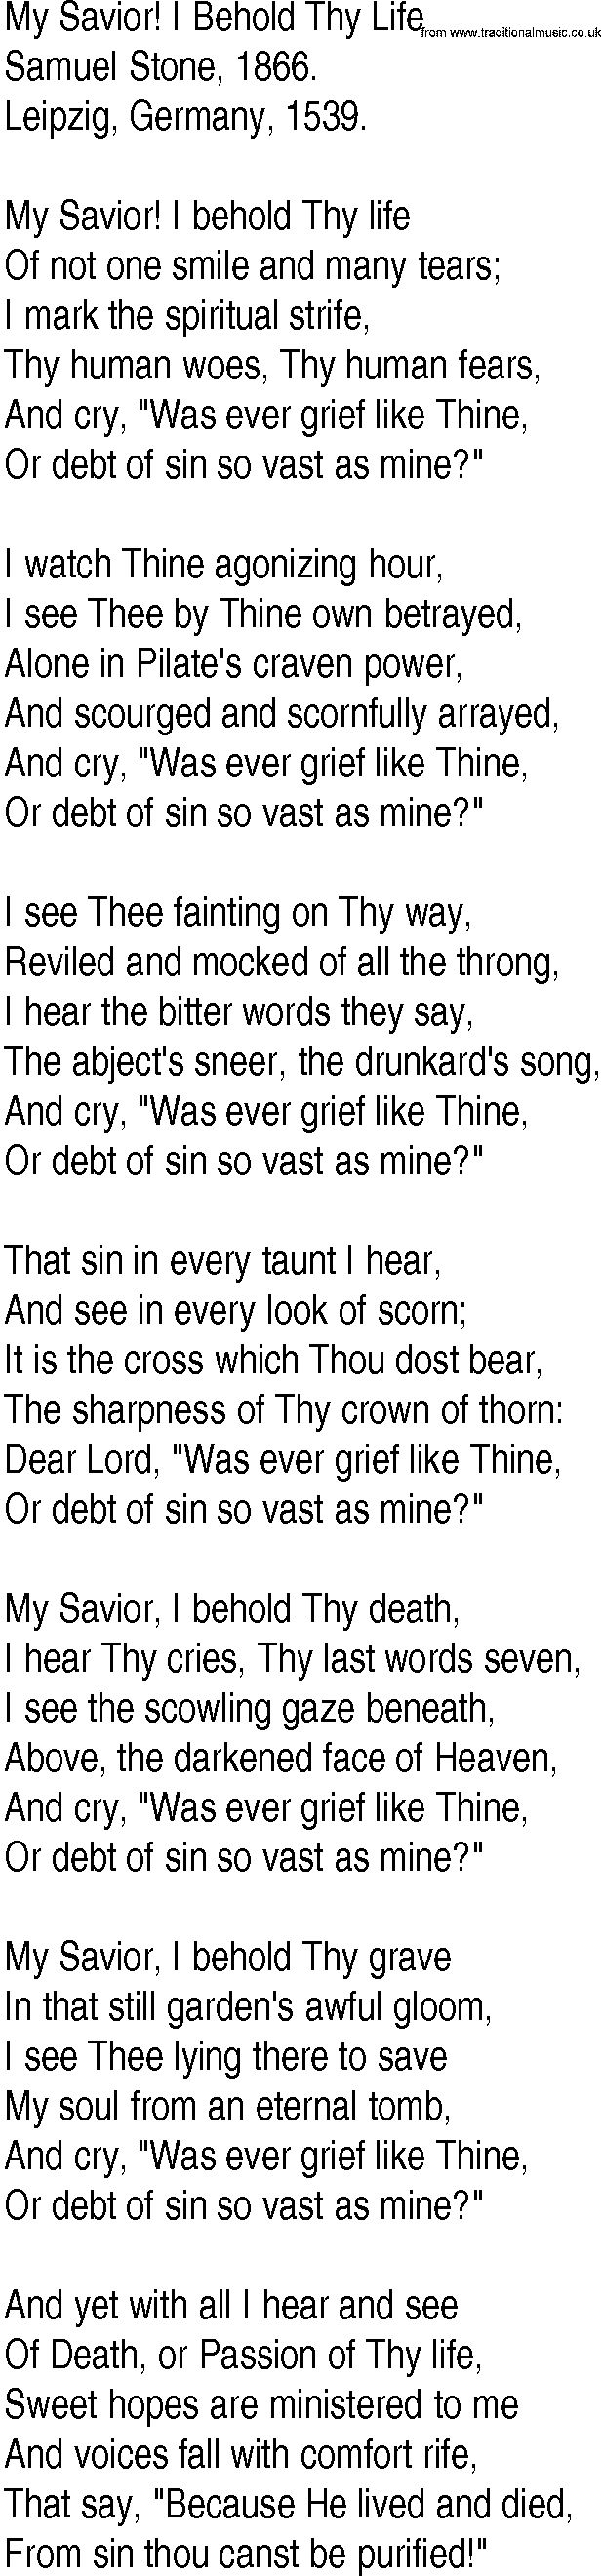 Hymn and Gospel Song: My Savior! I Behold Thy Life by Samuel Stone lyrics